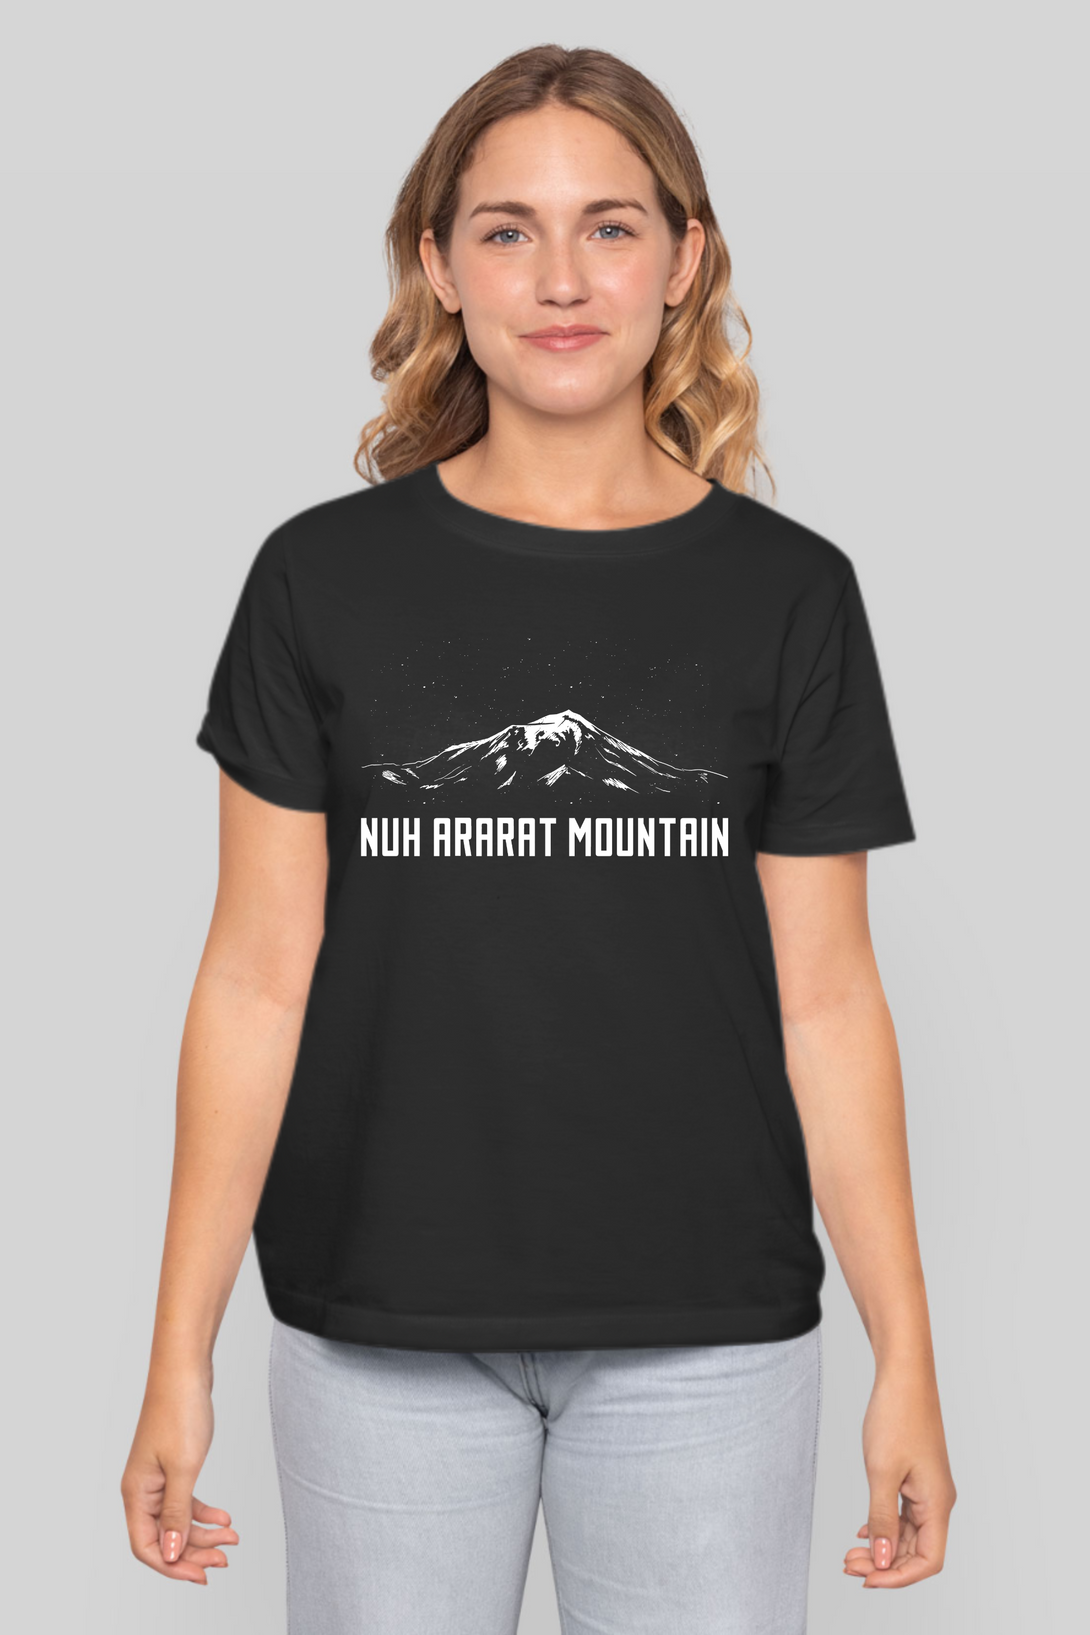 Nuh Ararat Mountain Printed T-Shirt For Women - WowWaves - 8